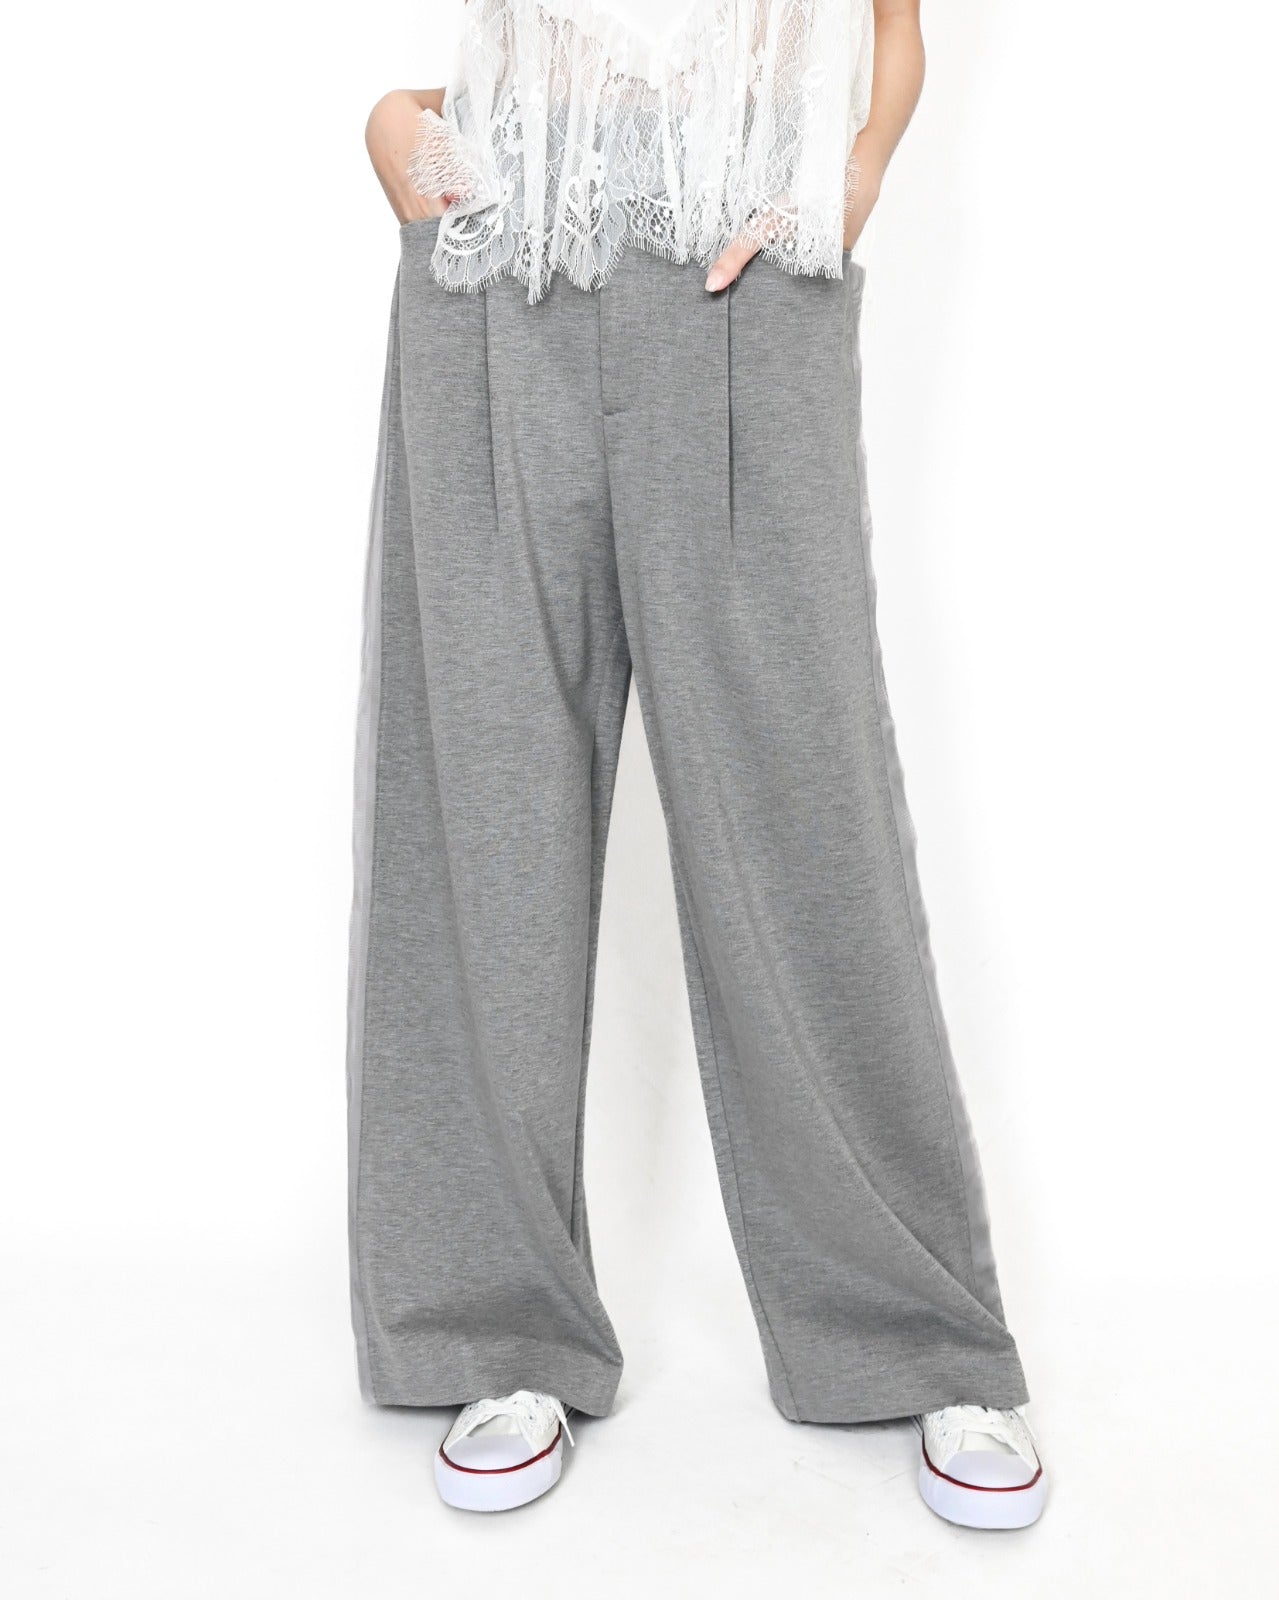 aalis TESS side mesh trim knit pants (Heather grey)